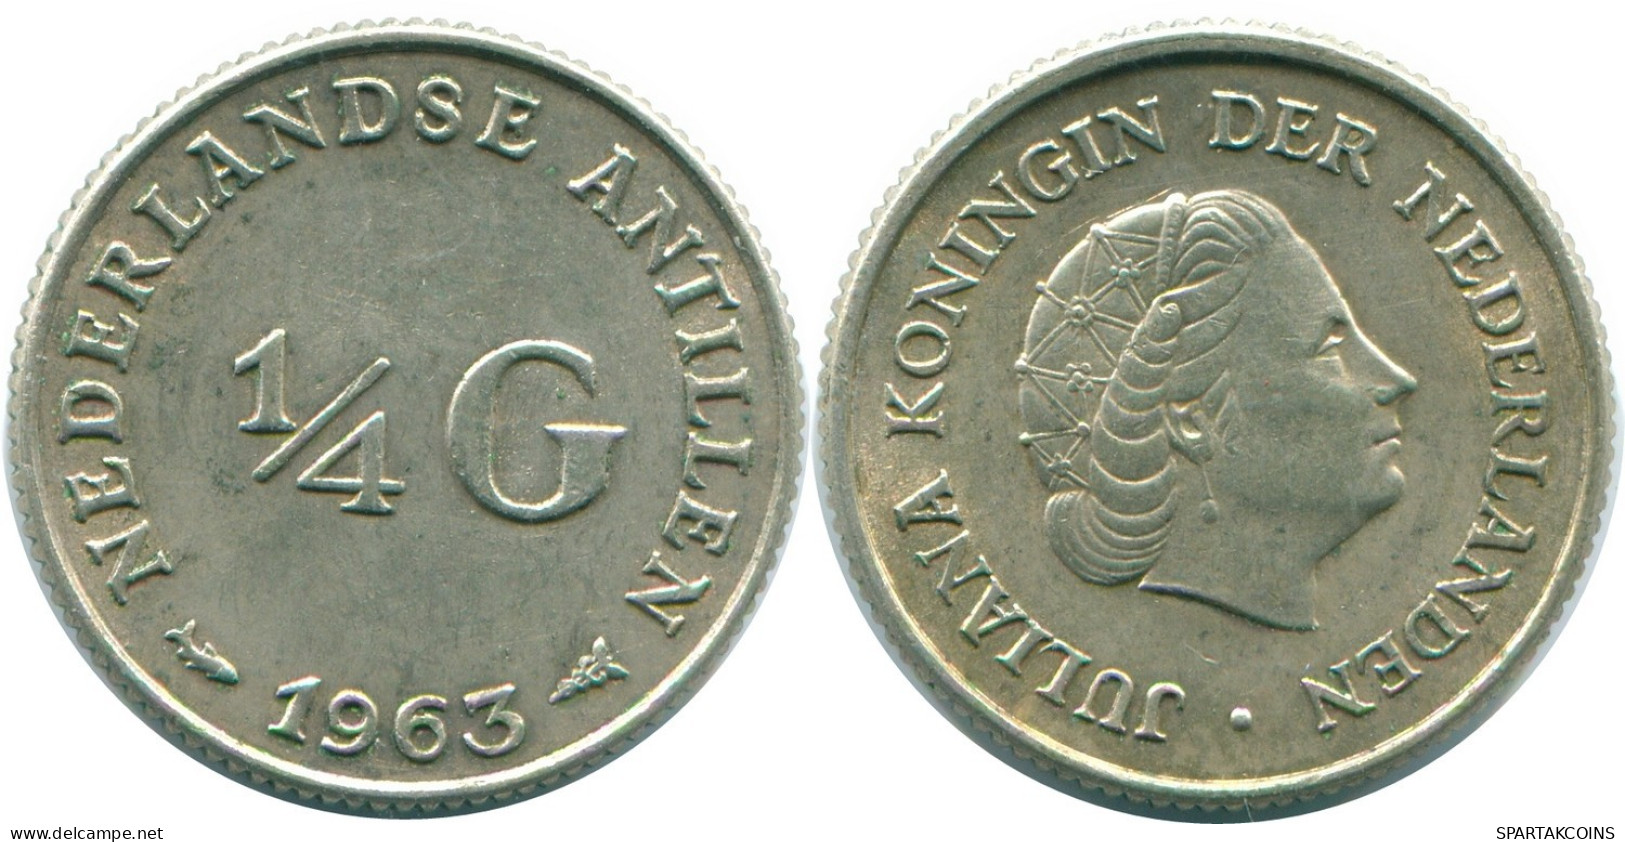 1/4 GULDEN 1963 NETHERLANDS ANTILLES SILVER Colonial Coin #NL11192.4.U.A - Netherlands Antilles